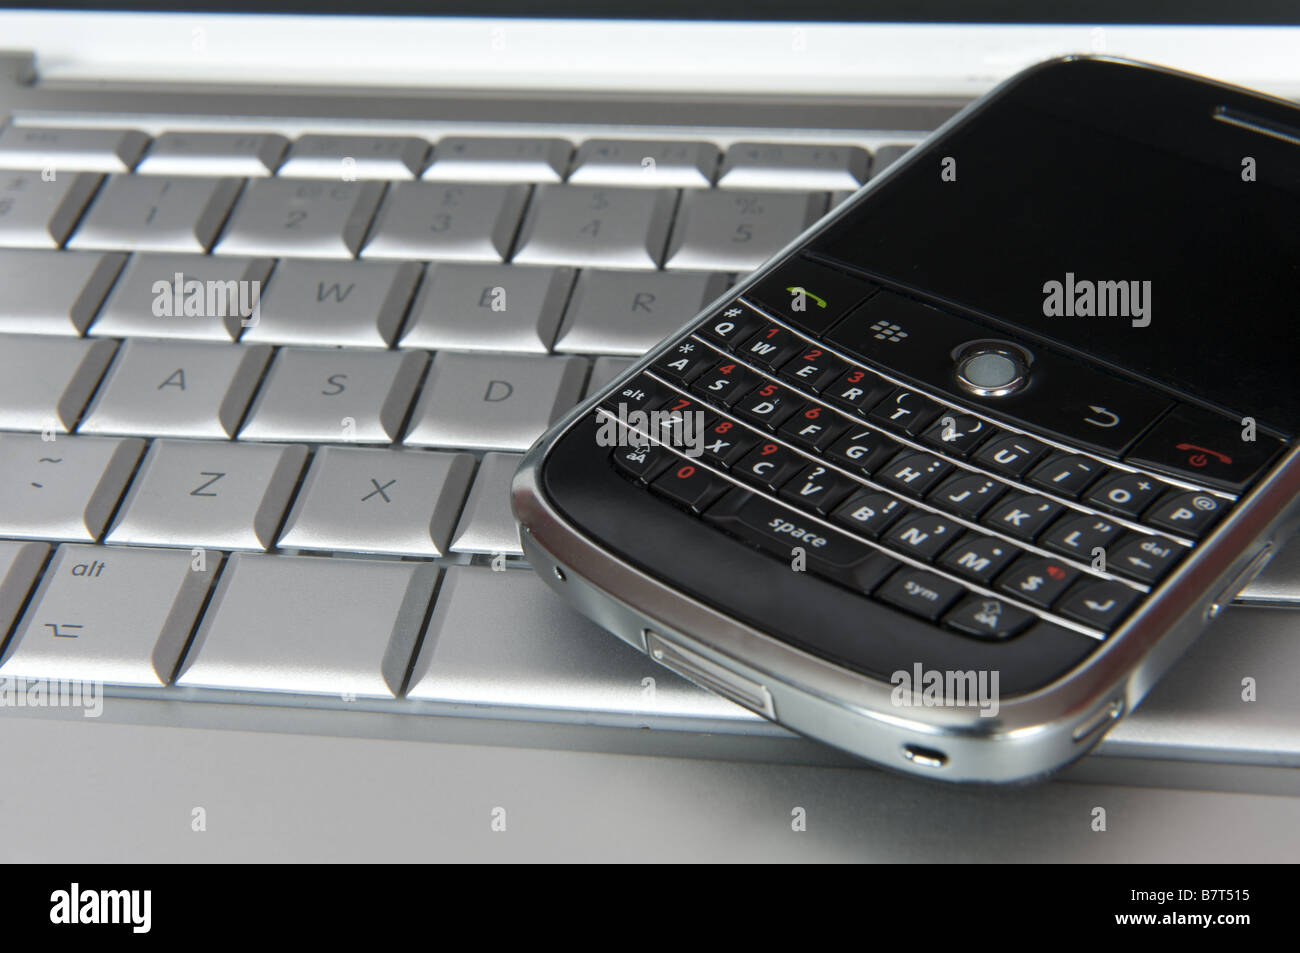 Blackberry smartphone on computer keyboard Stock Photo